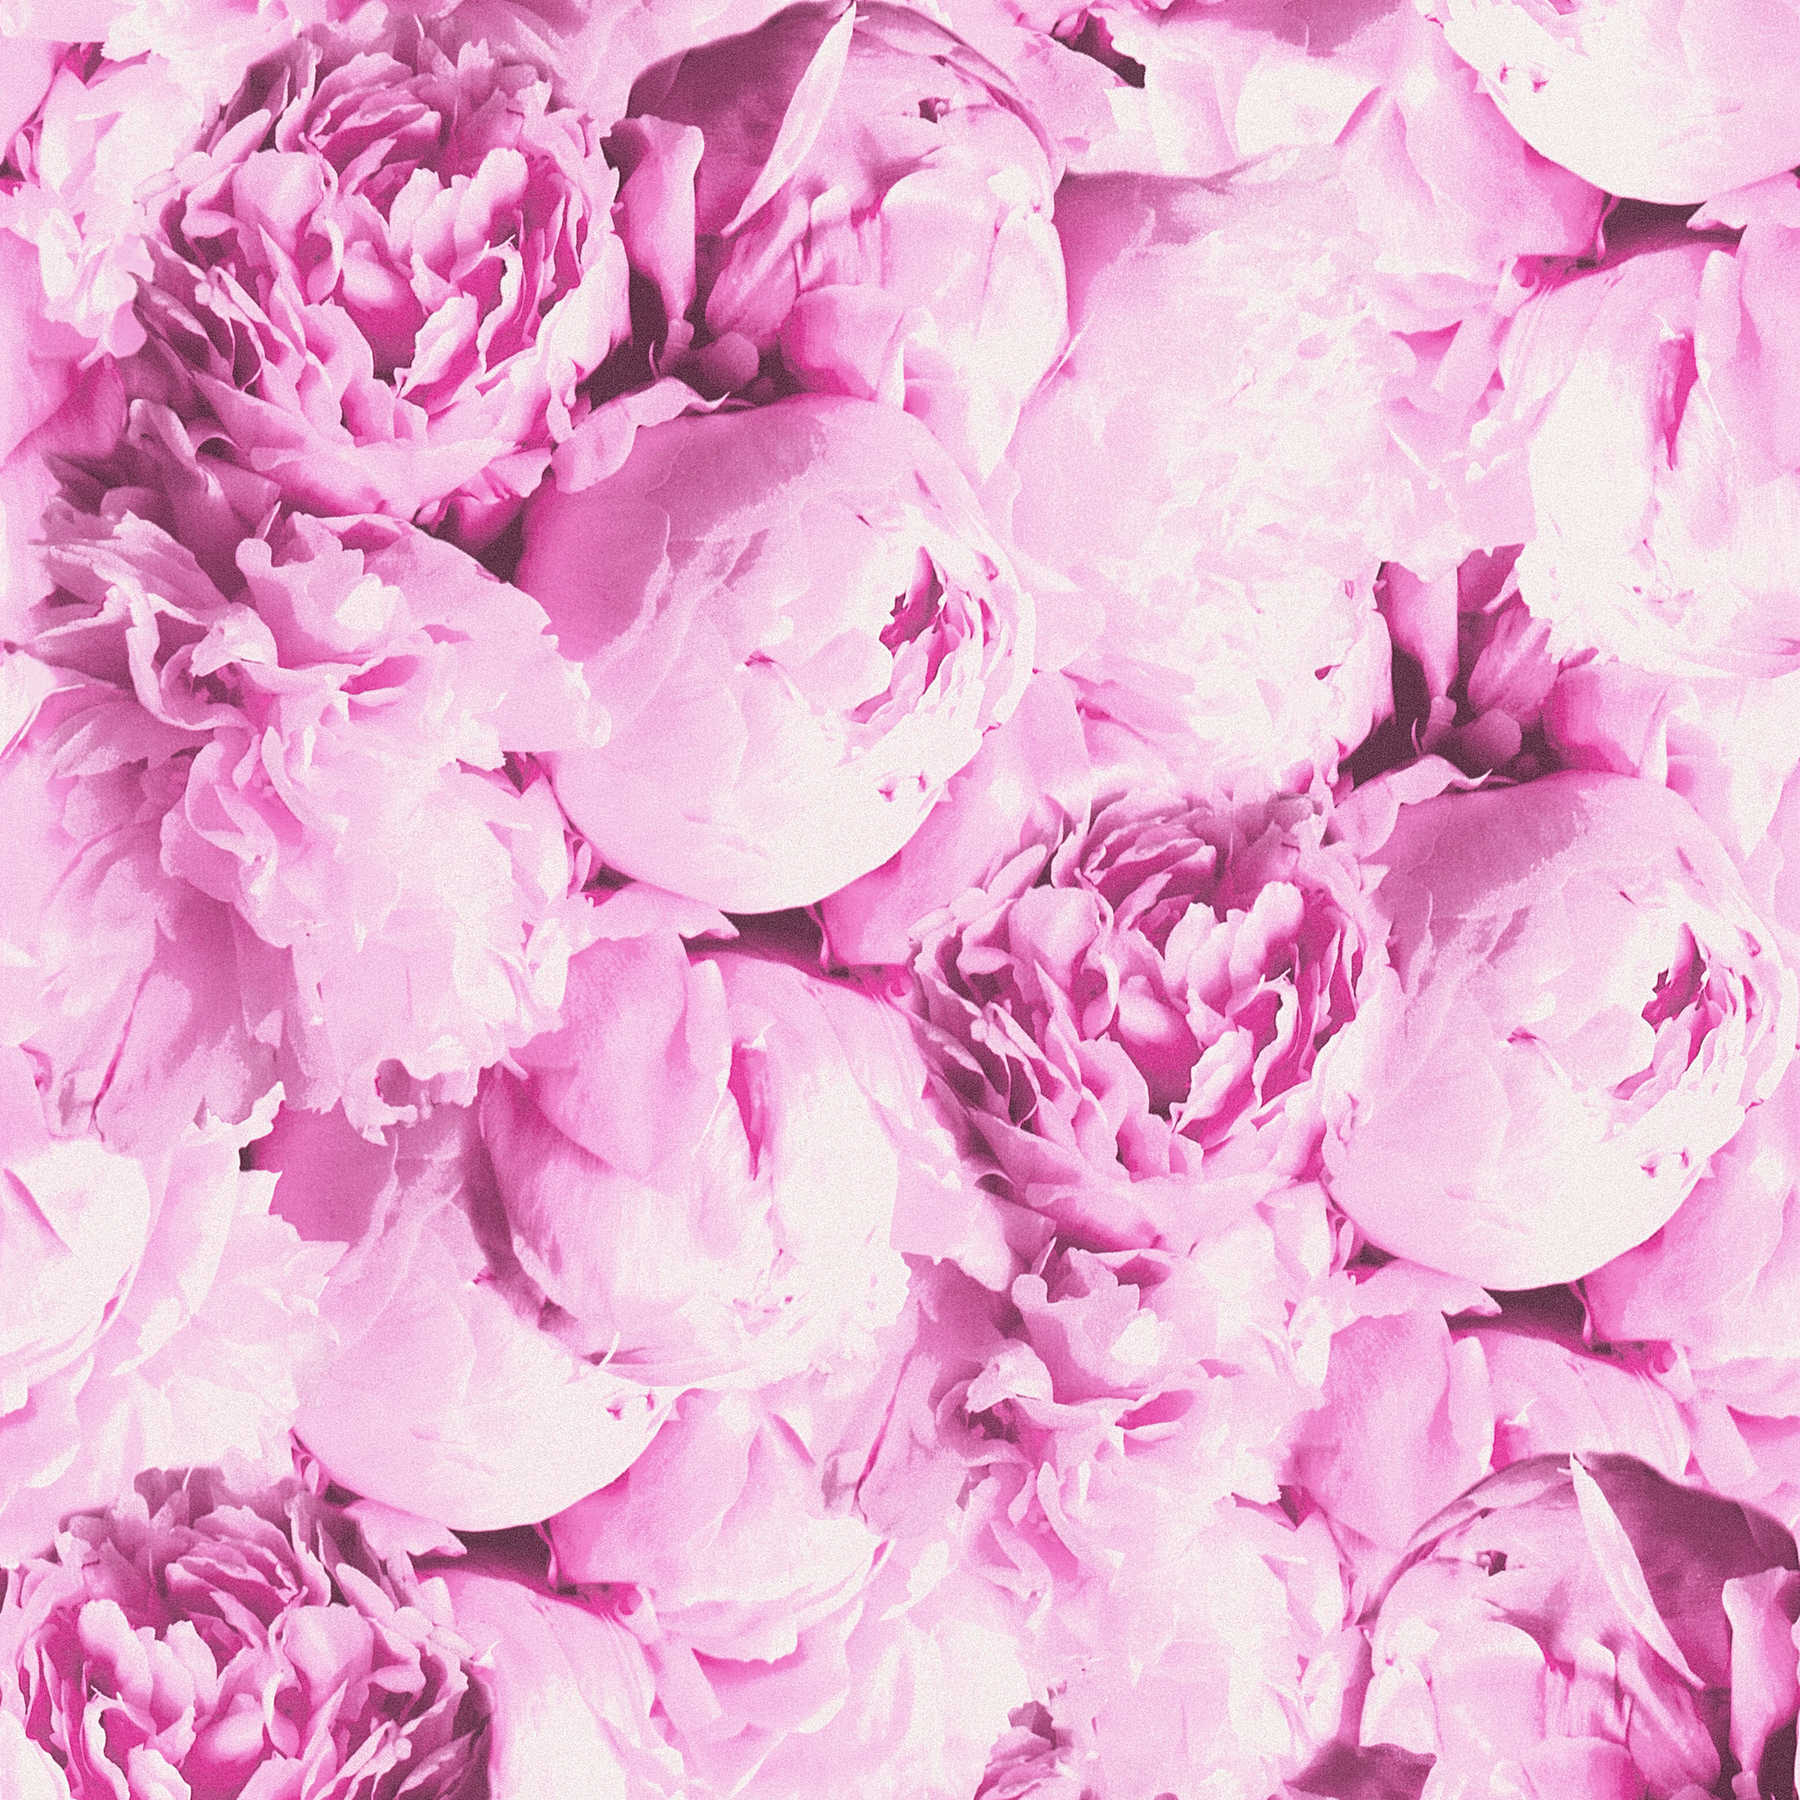         Blumentapete Rosen mit Schimmer Effekt – Rosa
    